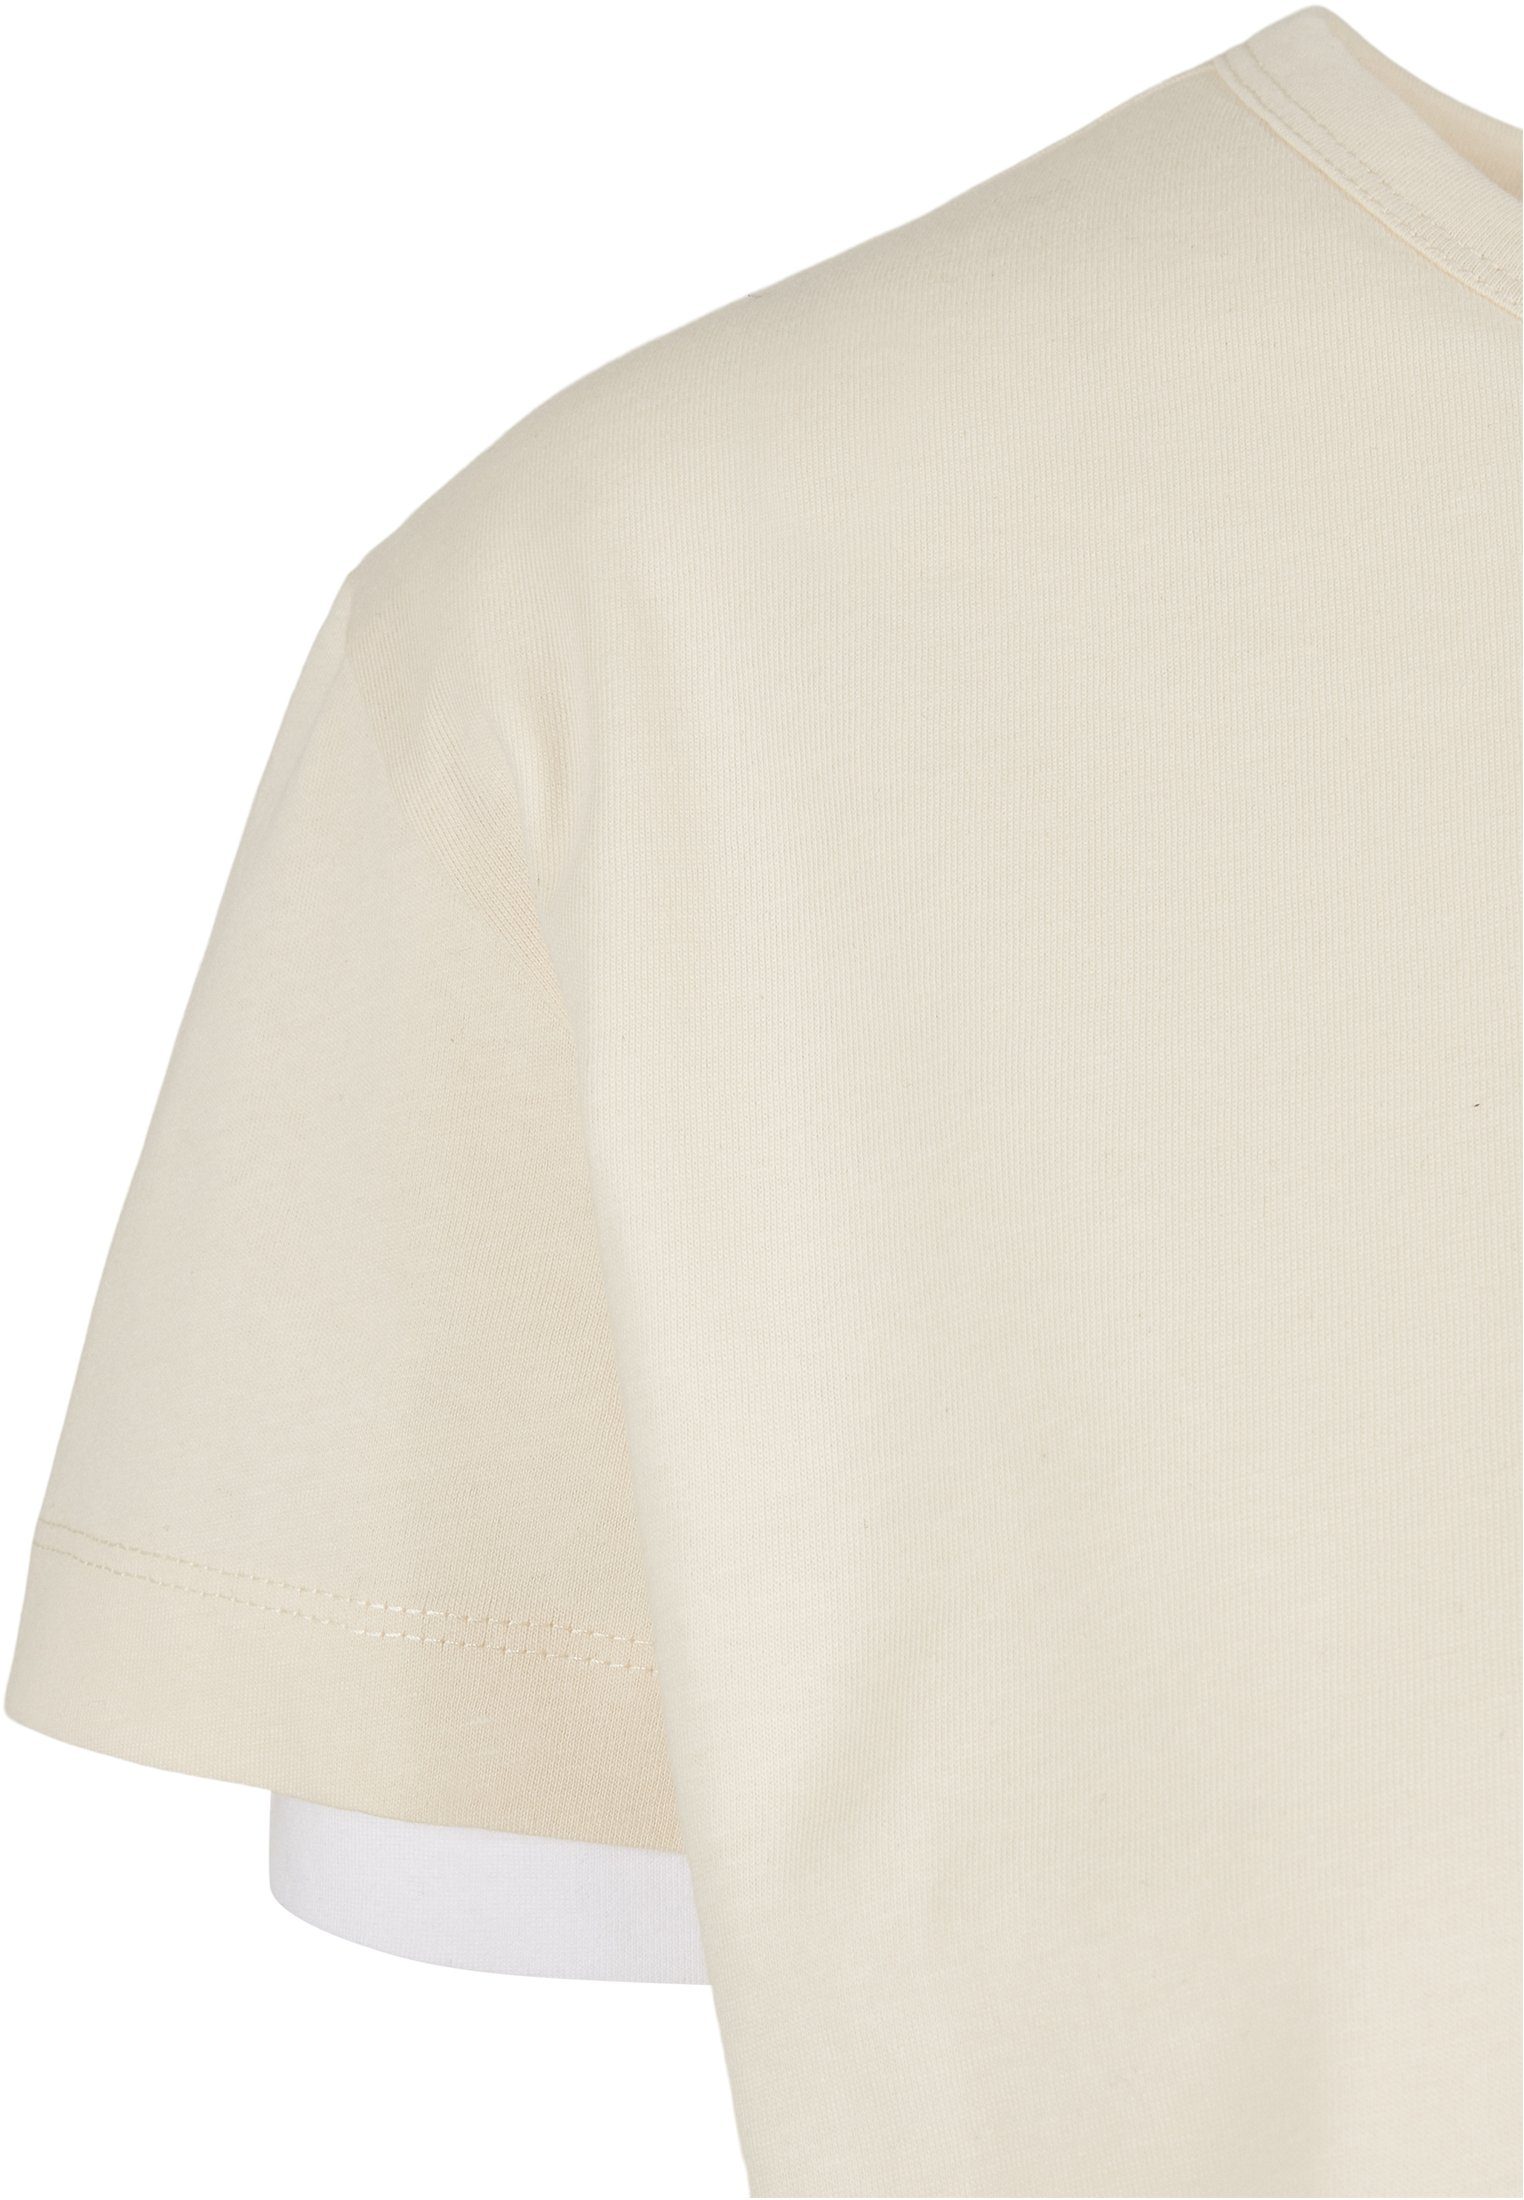 Full (1-tlg) whitesand/white Double Ladies Damen Layered URBAN CLASSICS T-Shirt Tee